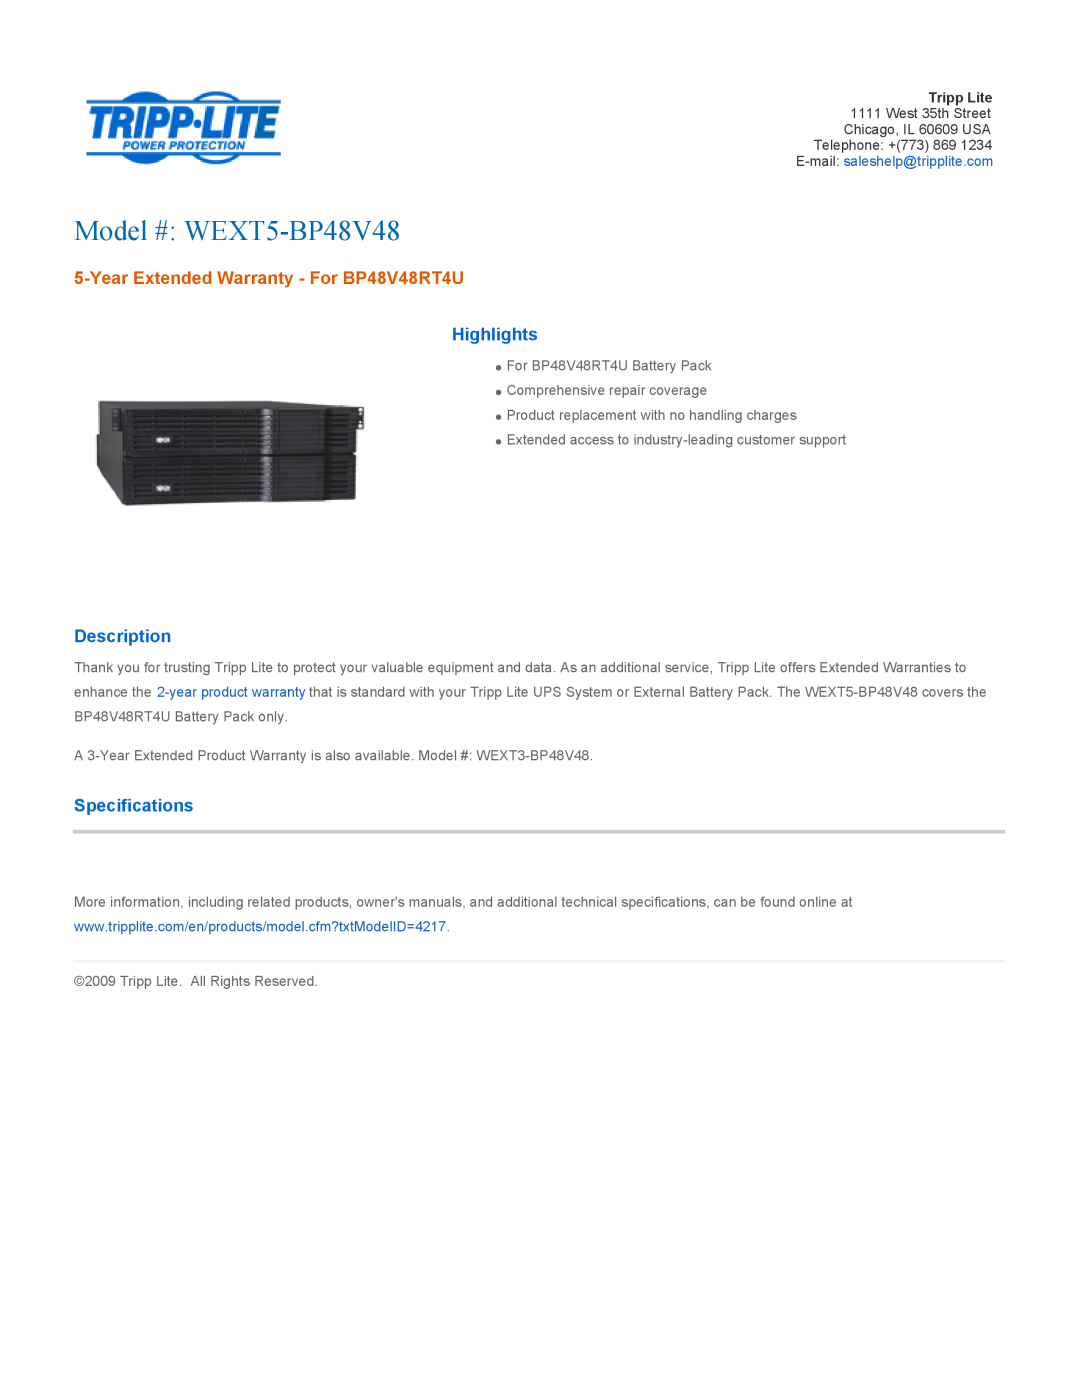 Tripp Lite warranty Model # WEXT5-BP48V48, Year Extended Warranty - For BP48V48RT4U, Highlights, Description 